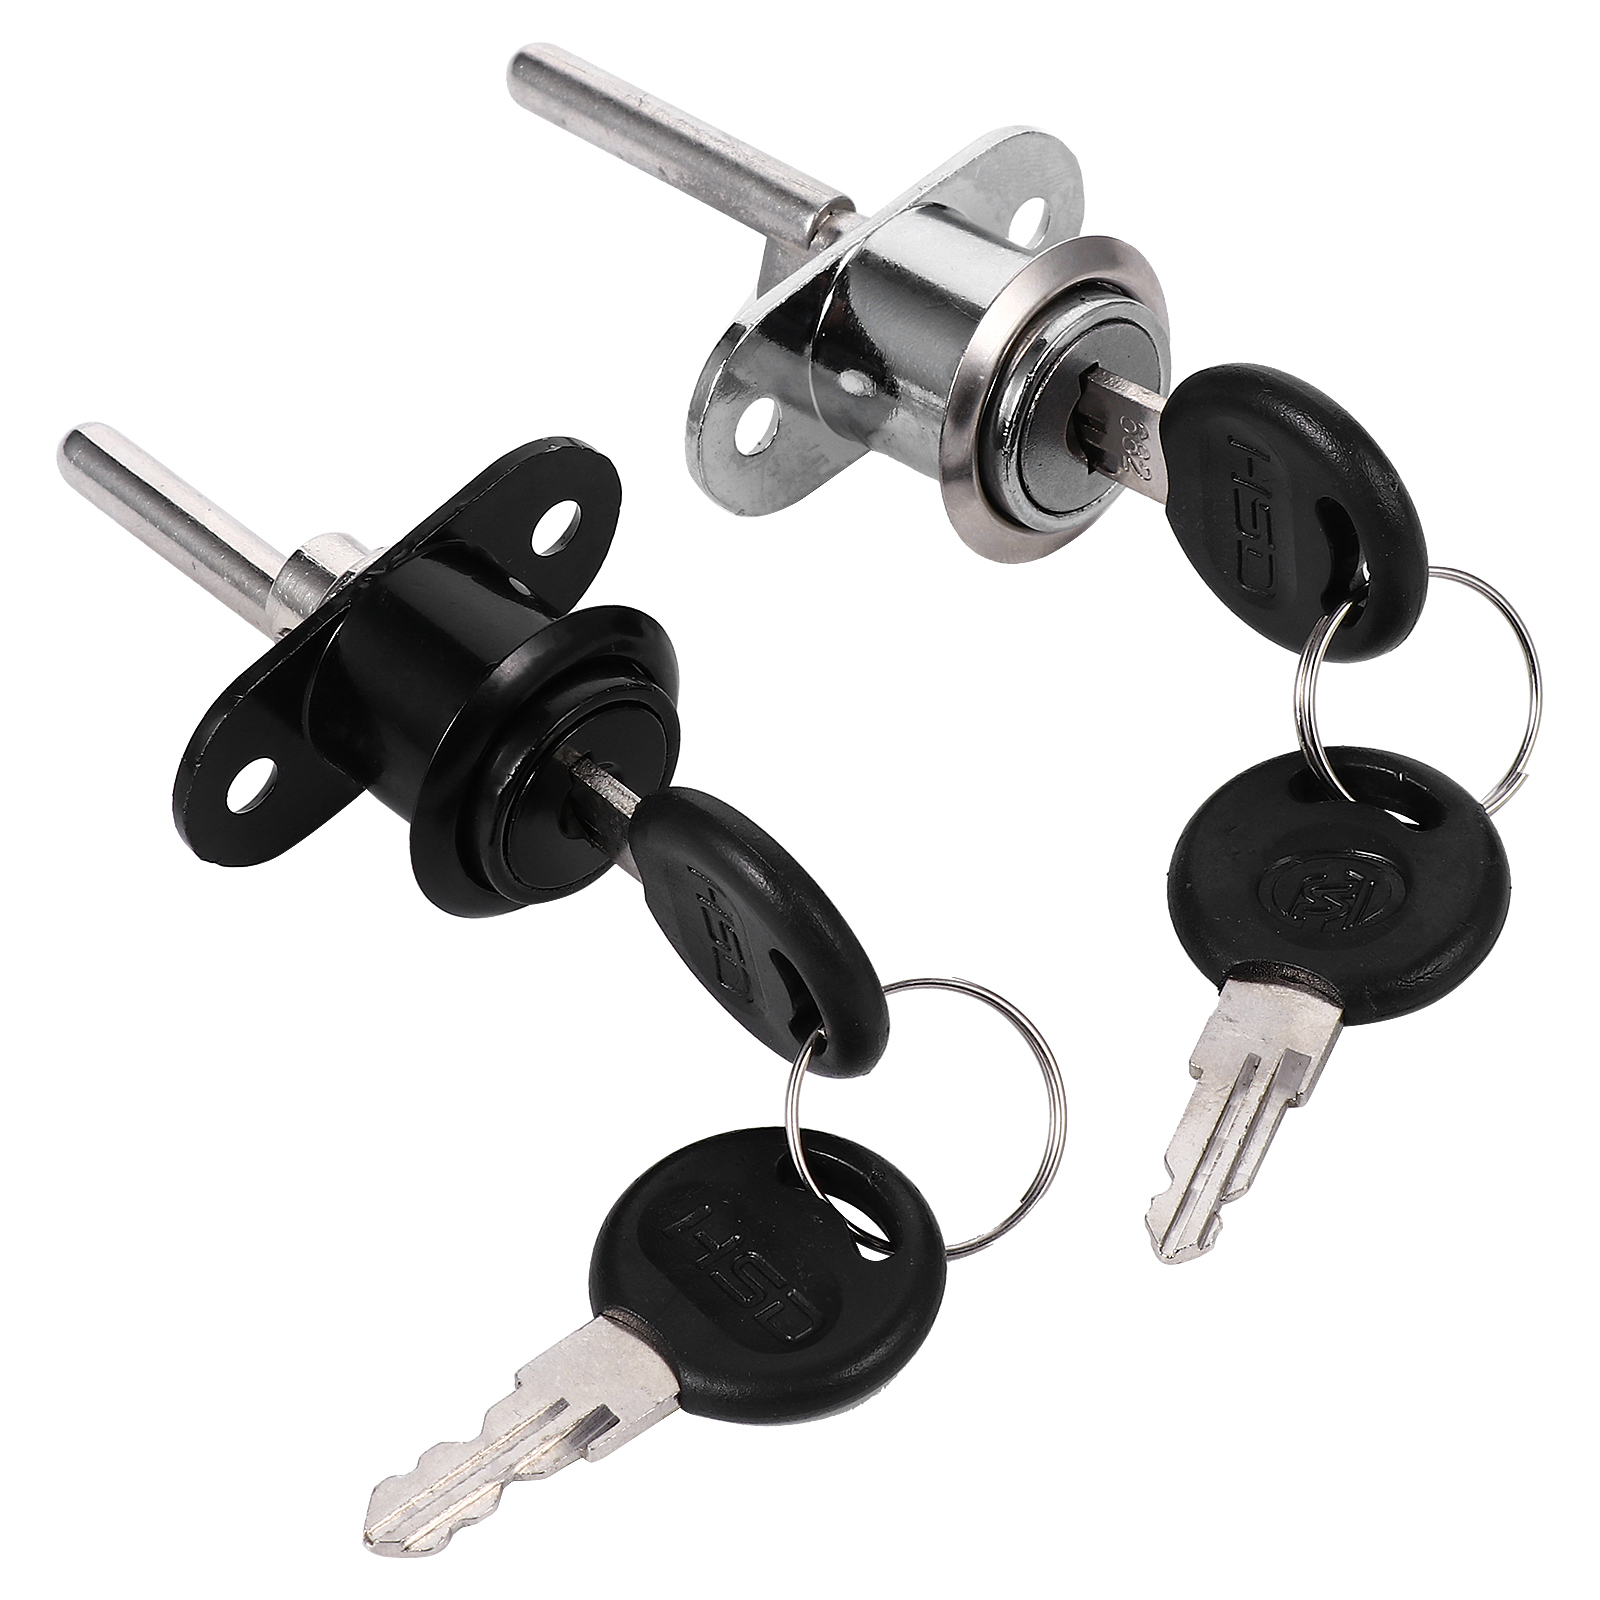 Frcolor 2pcs Drawer Locks Wardrobe Locks with Keys Duarble Furniture Safety Locks, Adult Unisex, Size: 6x4.2cm